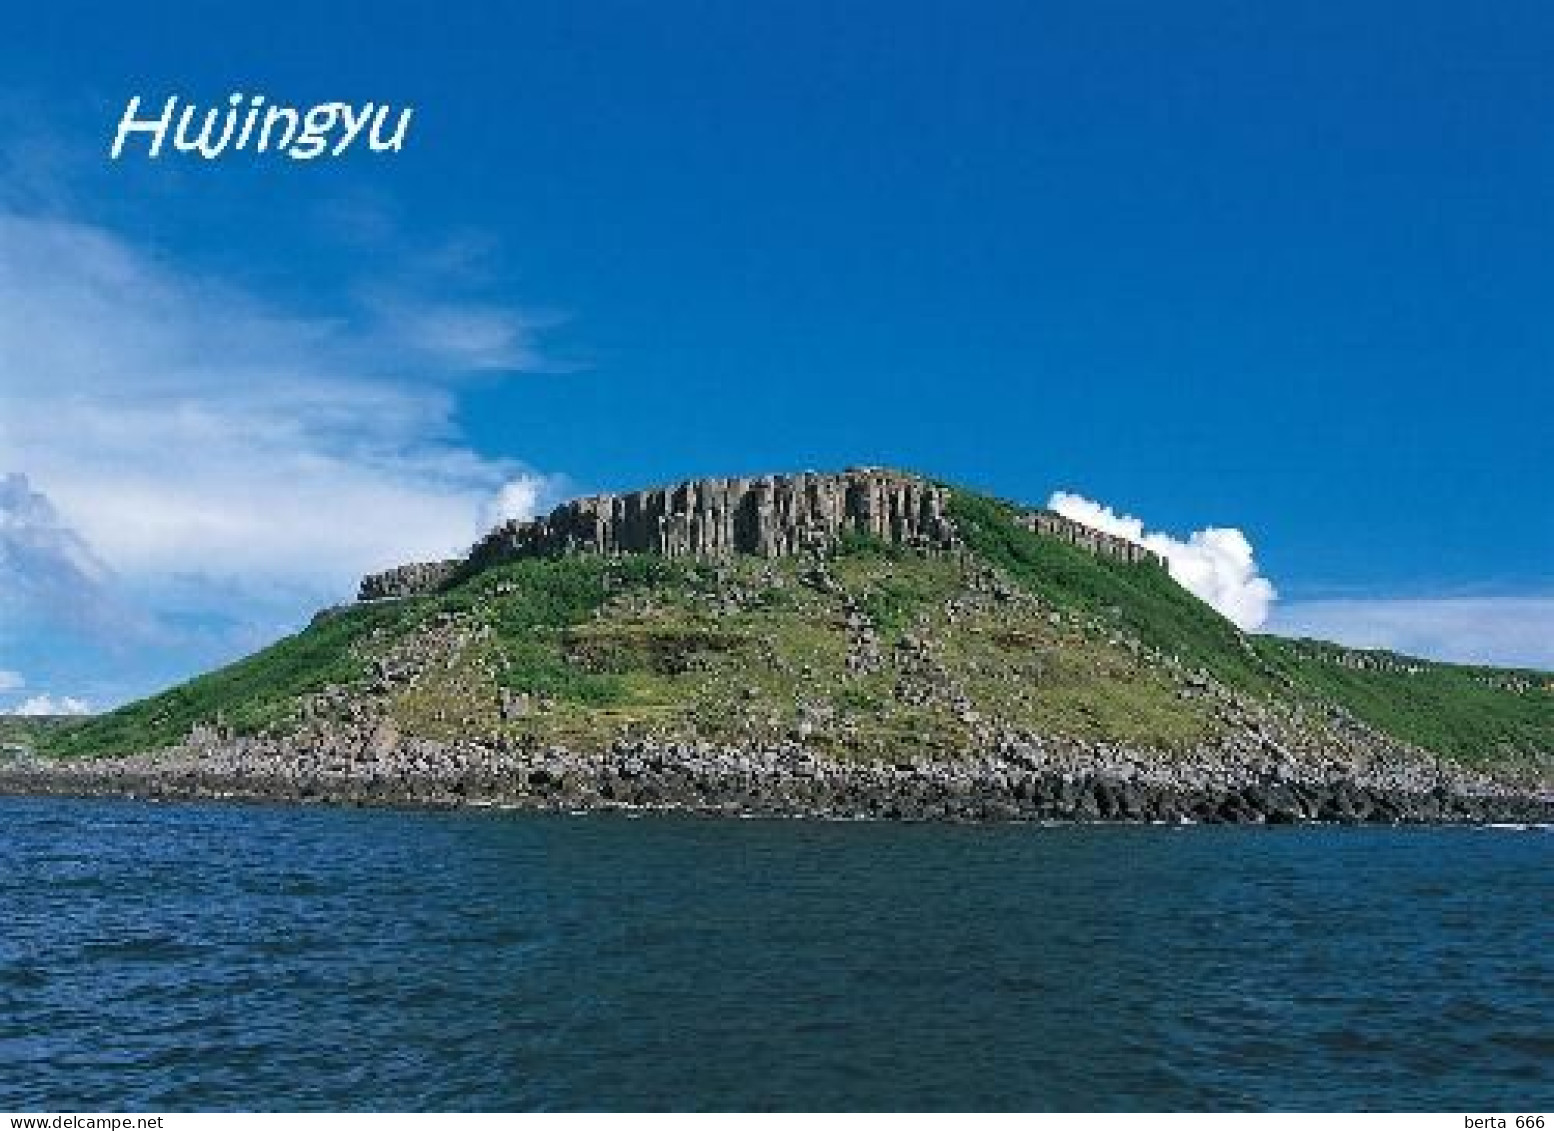 Taiwan Penghu Islands Hujingyu New Postcard - Taiwán